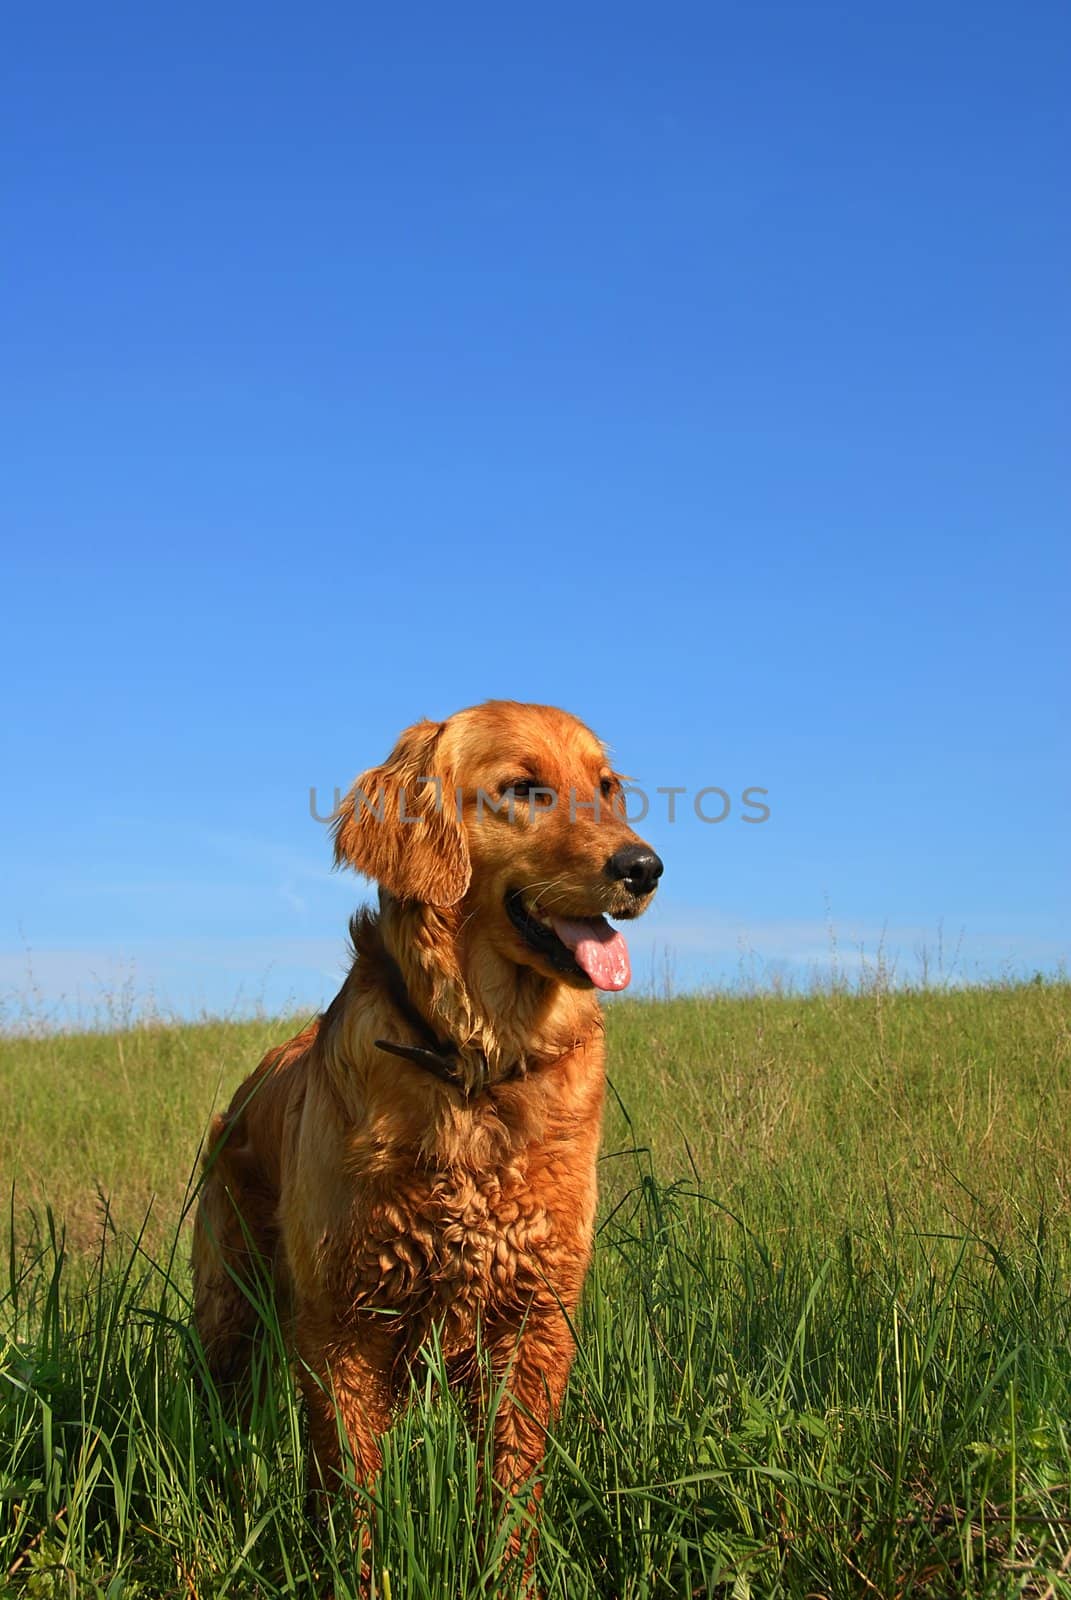 Golden retriever dog portrait by simply